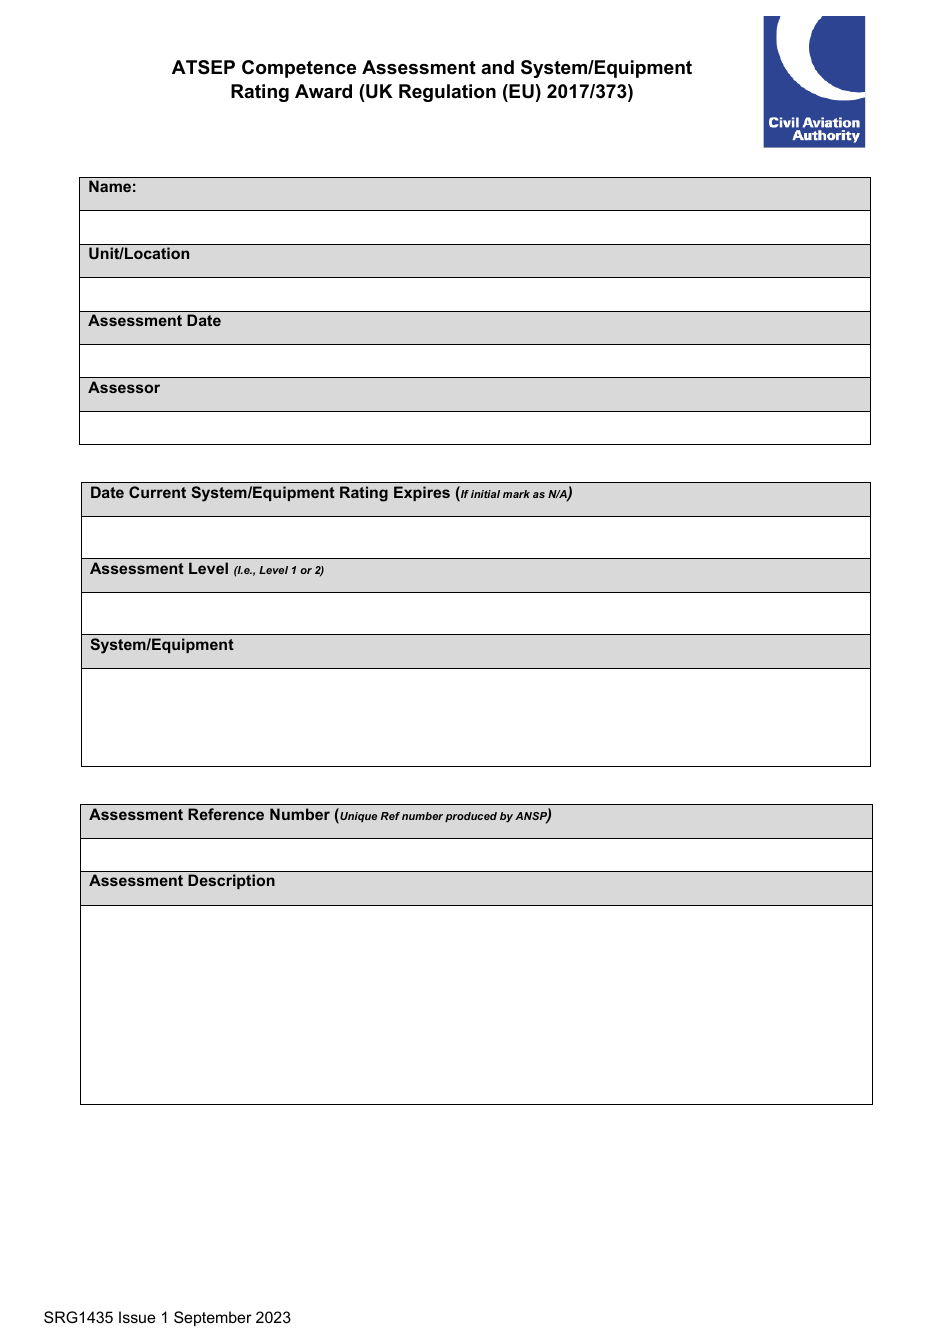 Form SRG1435 Atsep Competence Assessment and System / Equipment Rating Award (UK Regulation (Eu) 2017 / 373) - United Kingdom, Page 1